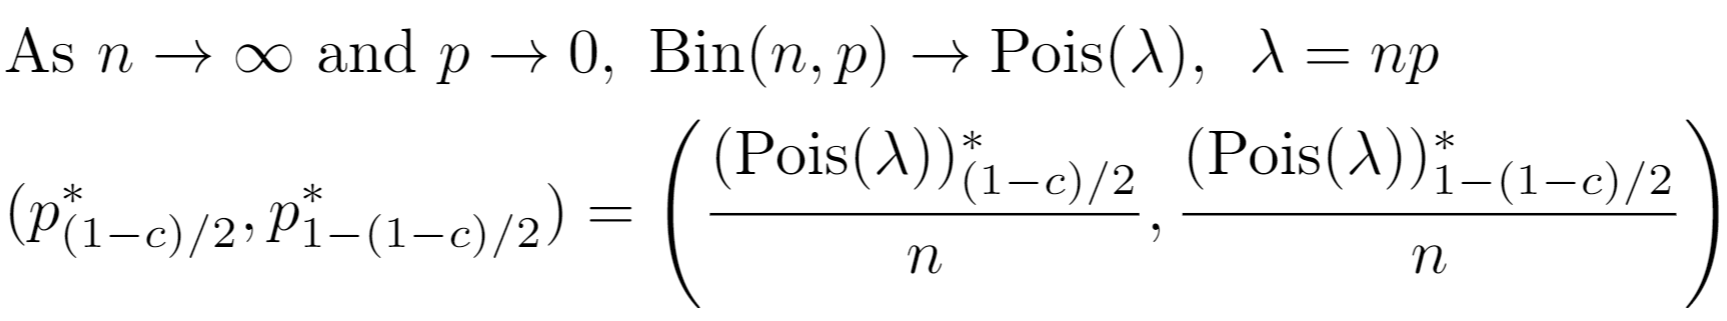 Proportion Confidence Intervals under Poisson Distribution